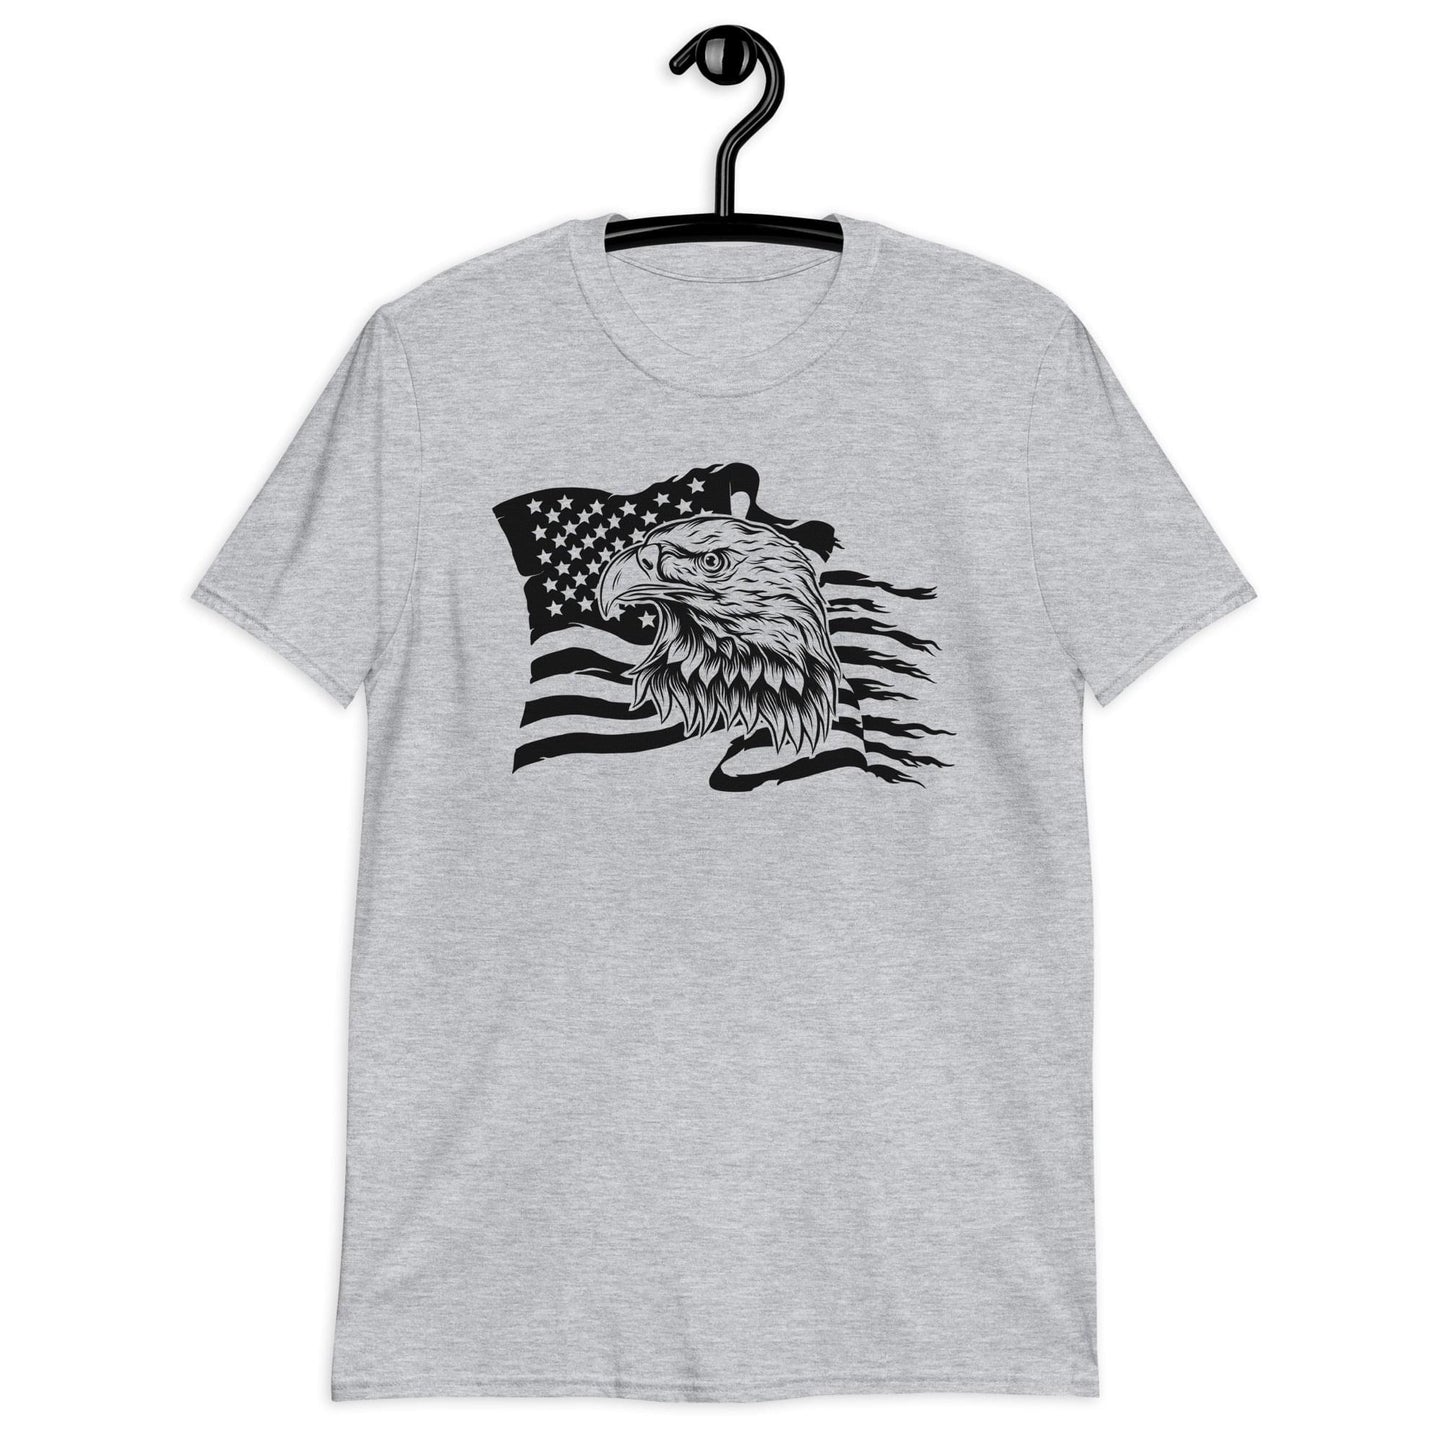 America Eagle Shirt / America Flag Shirt / Unisex American Flag Clothing / 4th Of July shirt